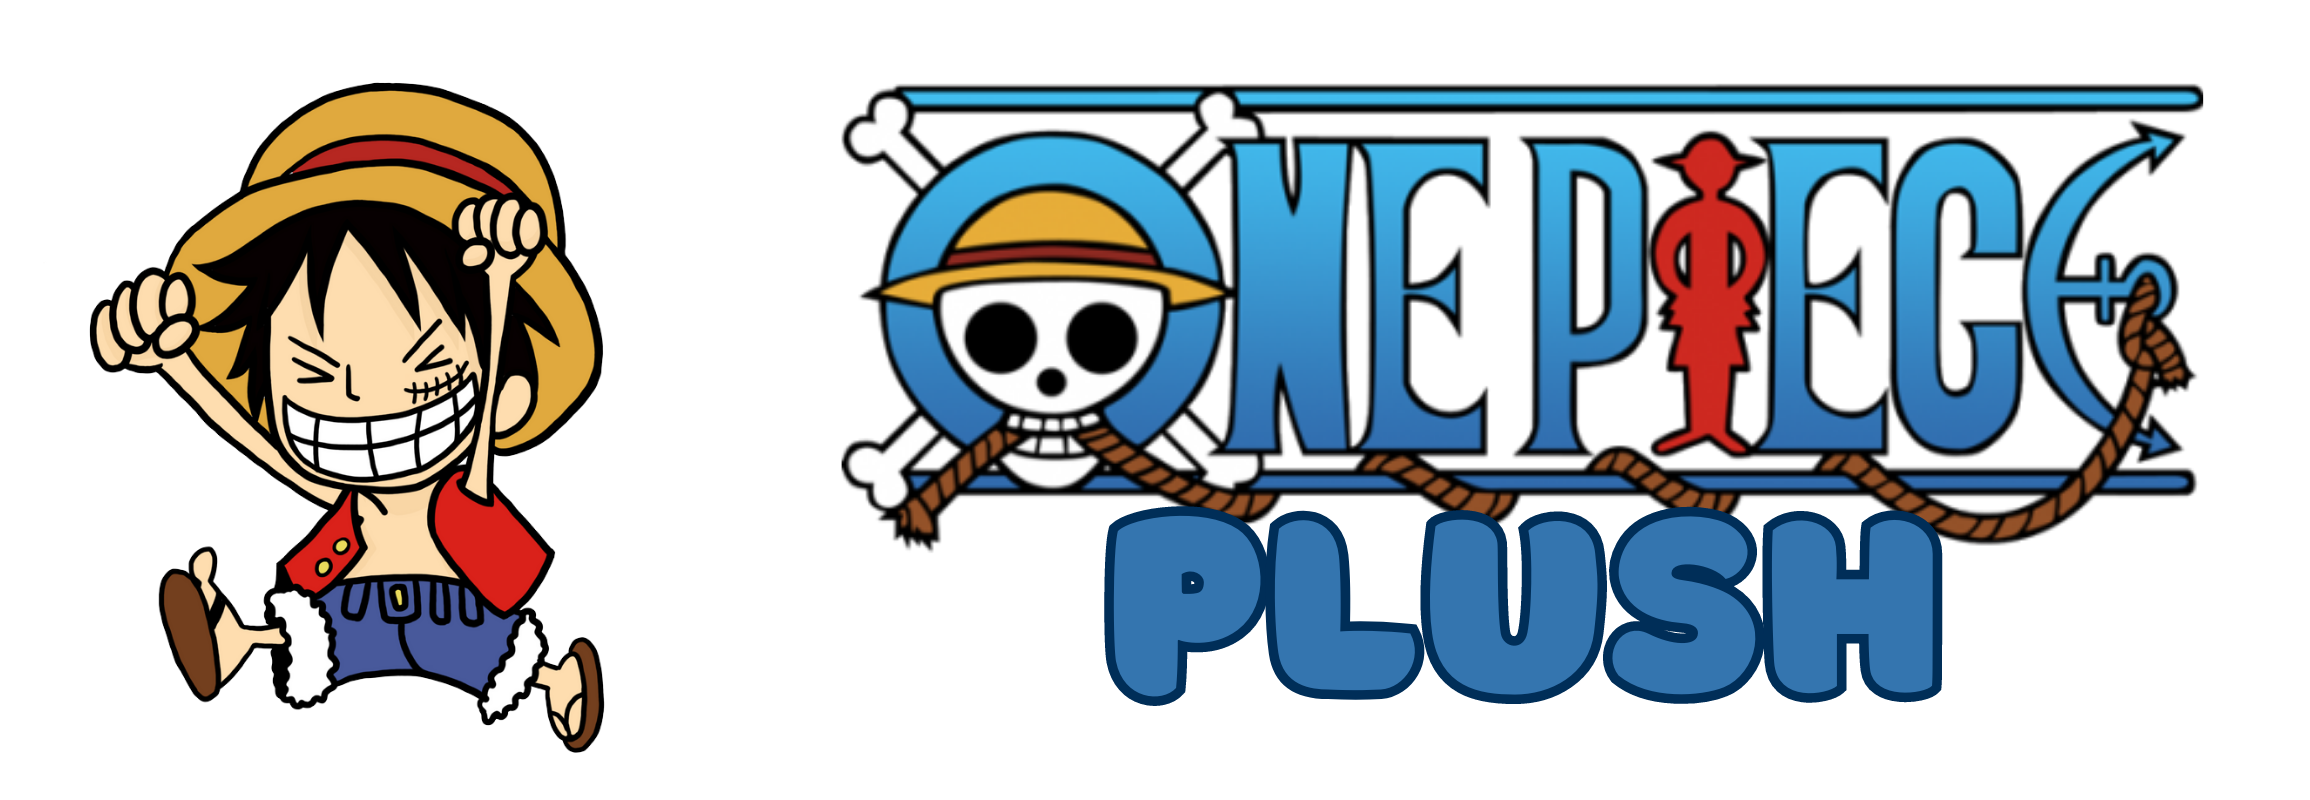 One Piece Plush